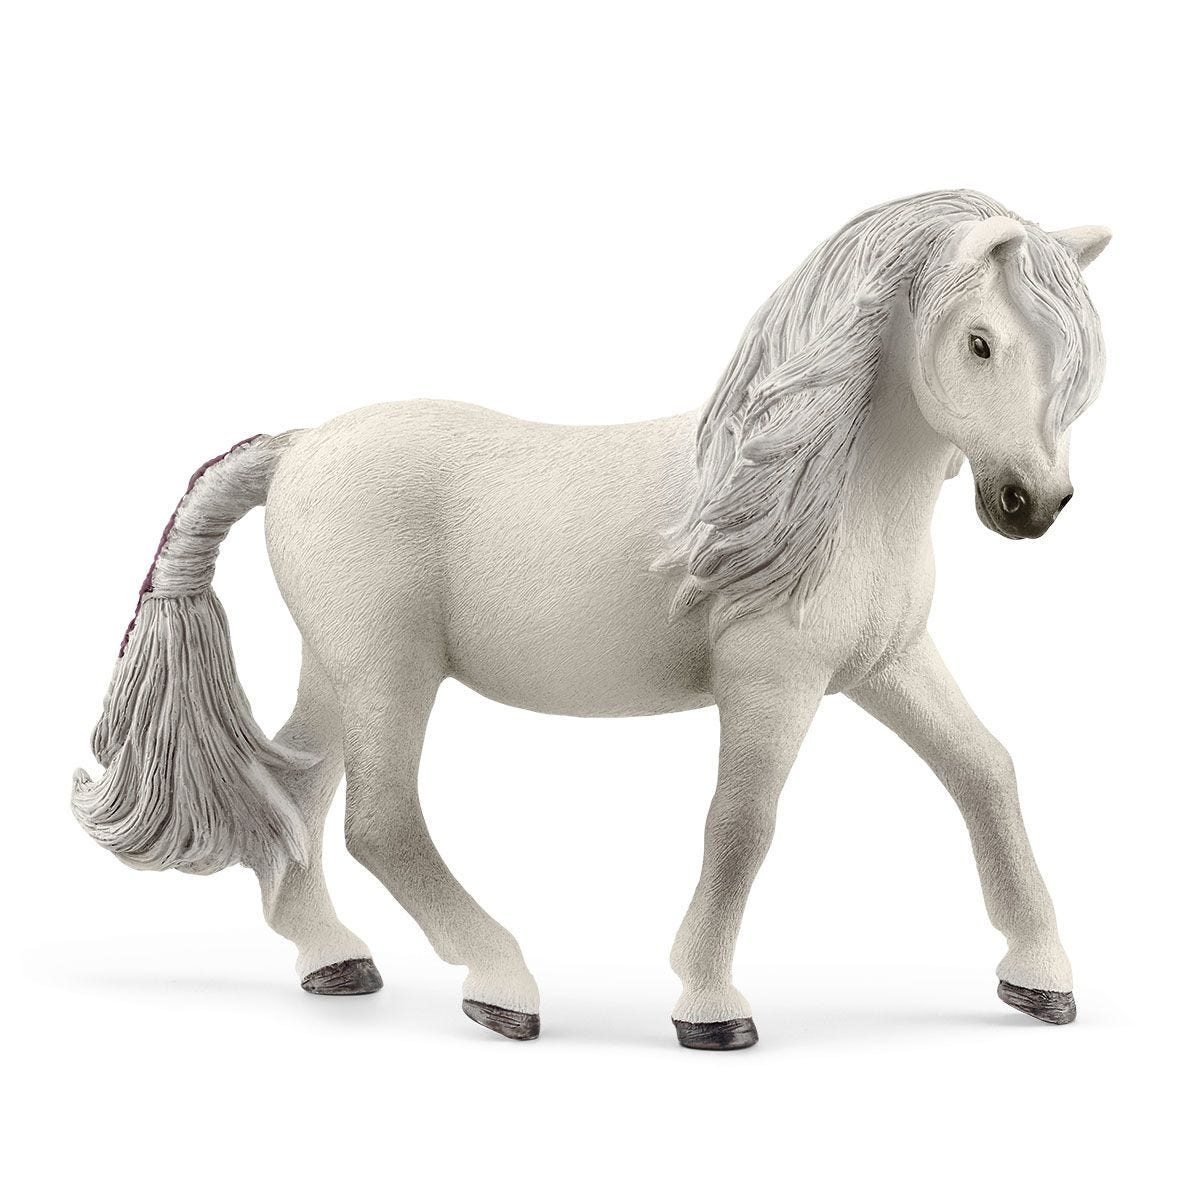 Iceland Pony Mare Figurine by Schleich # 13942